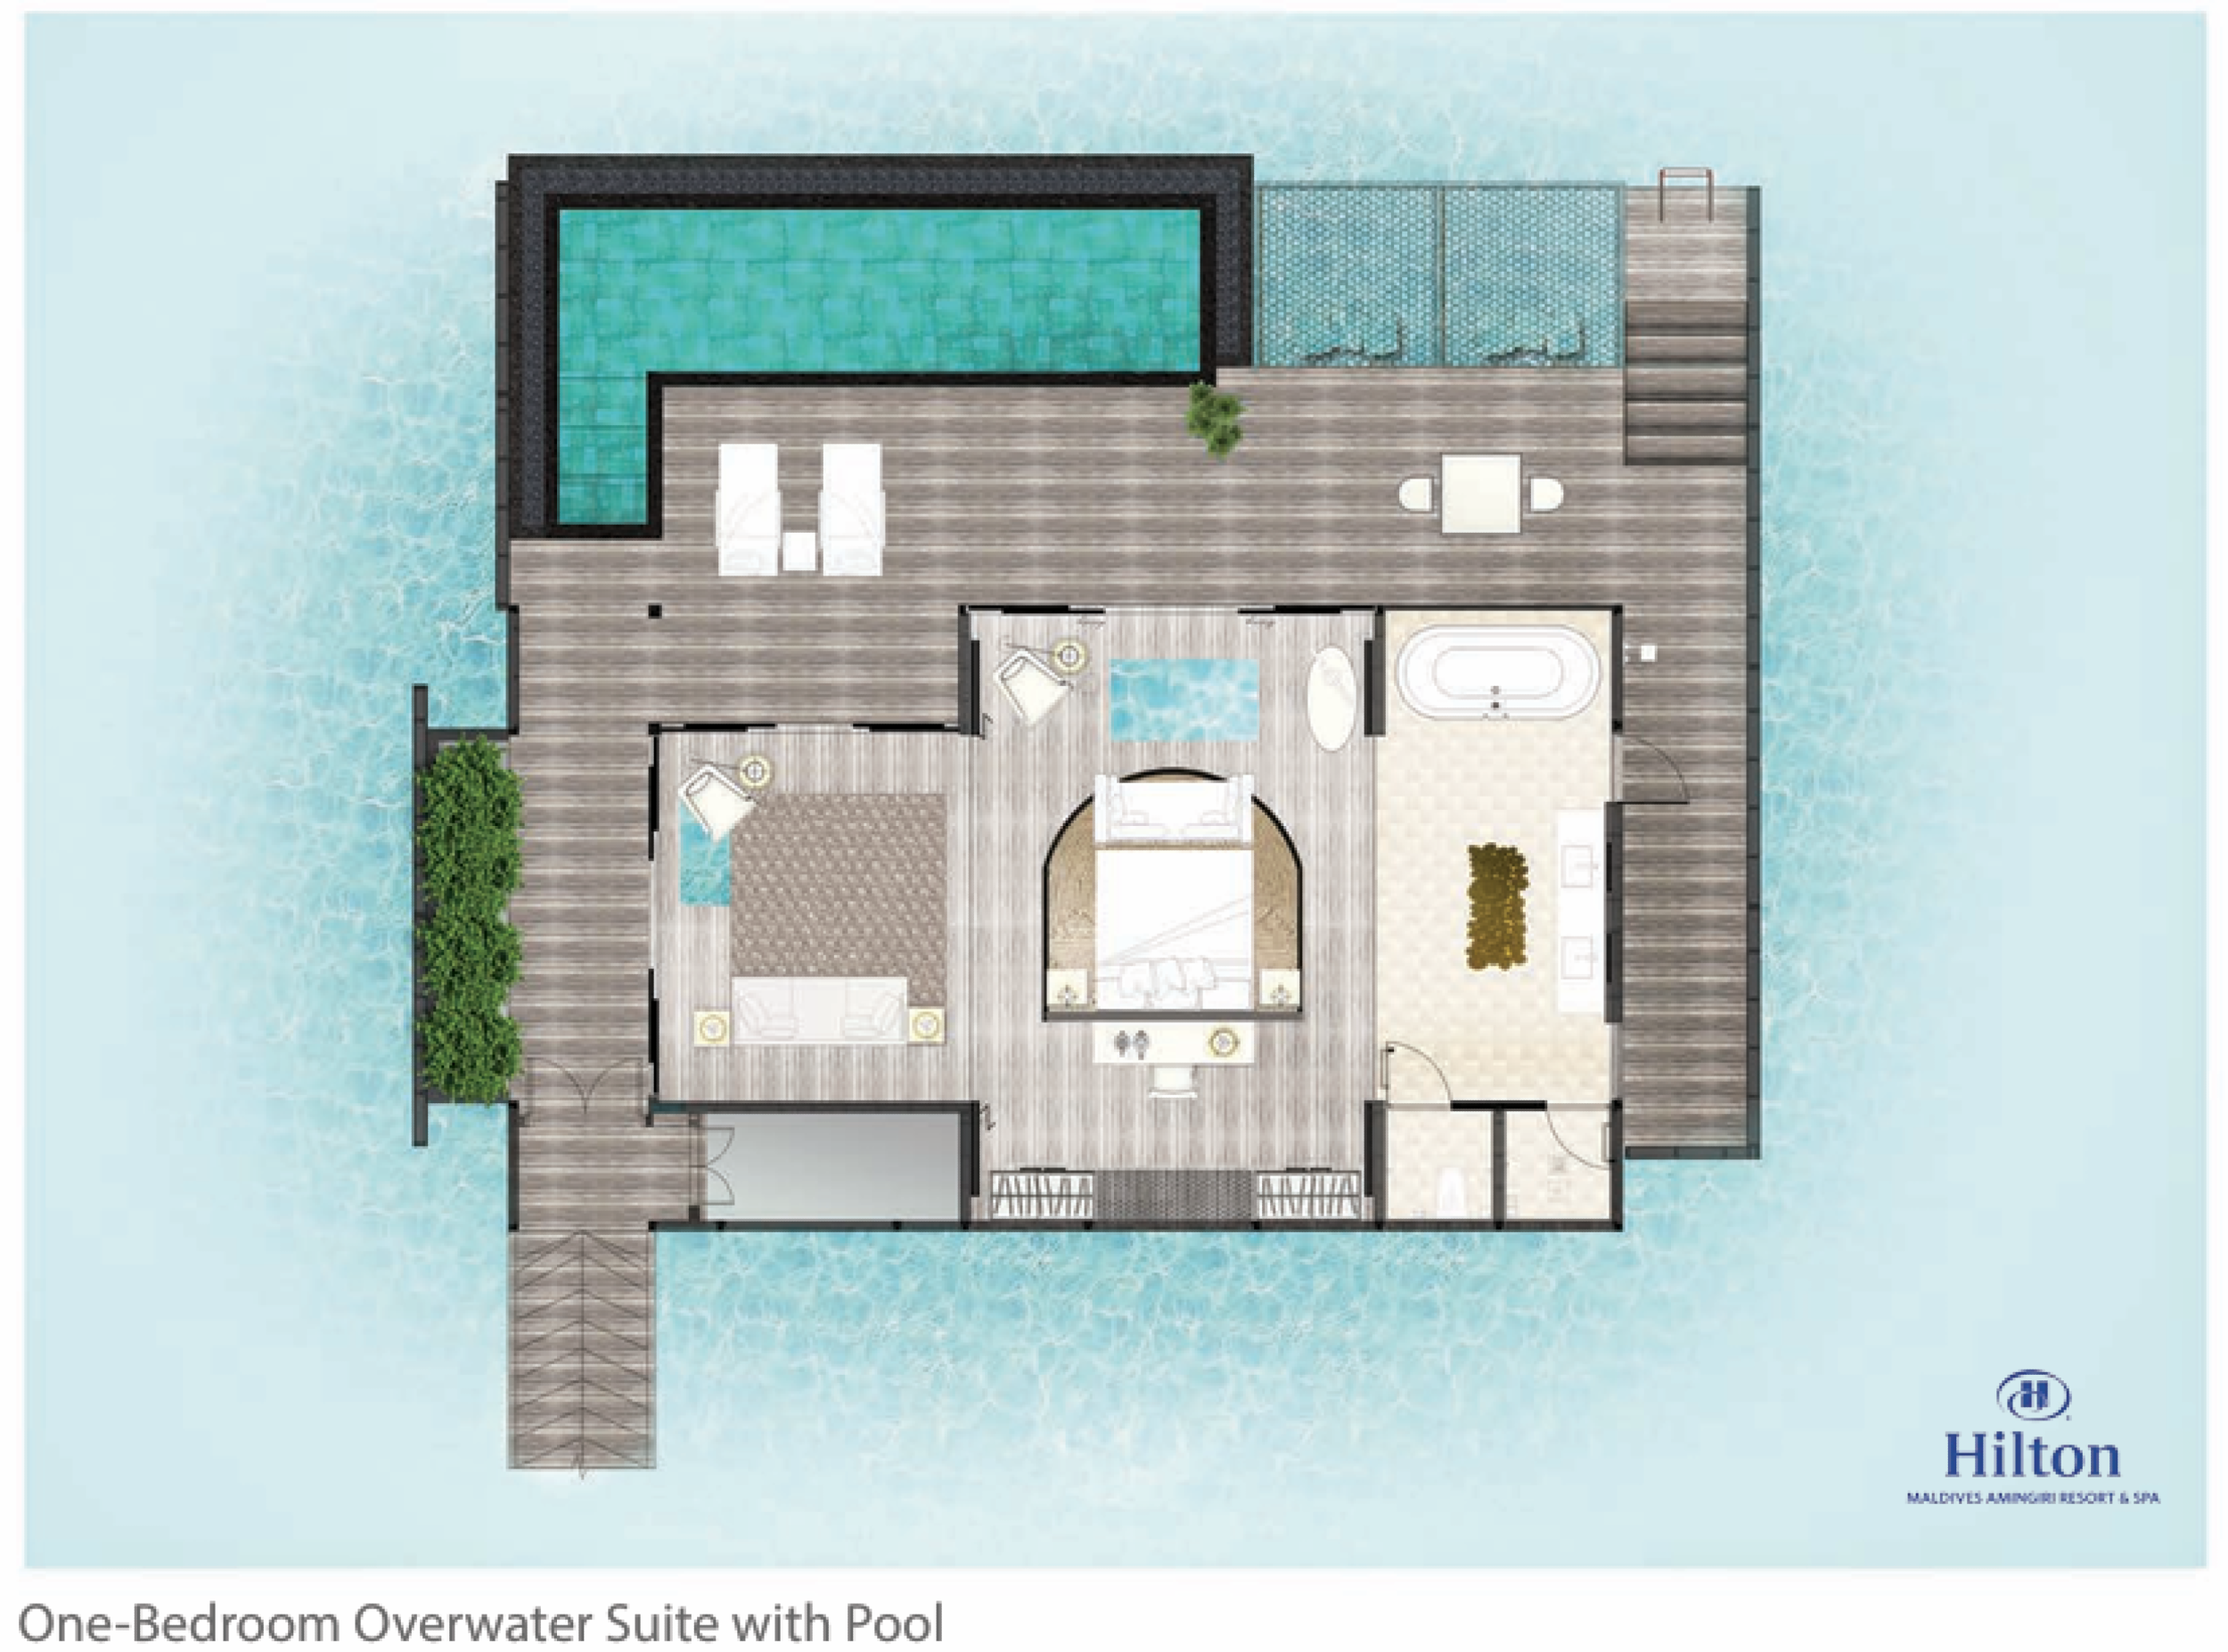 Overwater Suite with Pool - One Bedroom - Floor Plan - Hilton Maldives Amingiri Resort & Spa